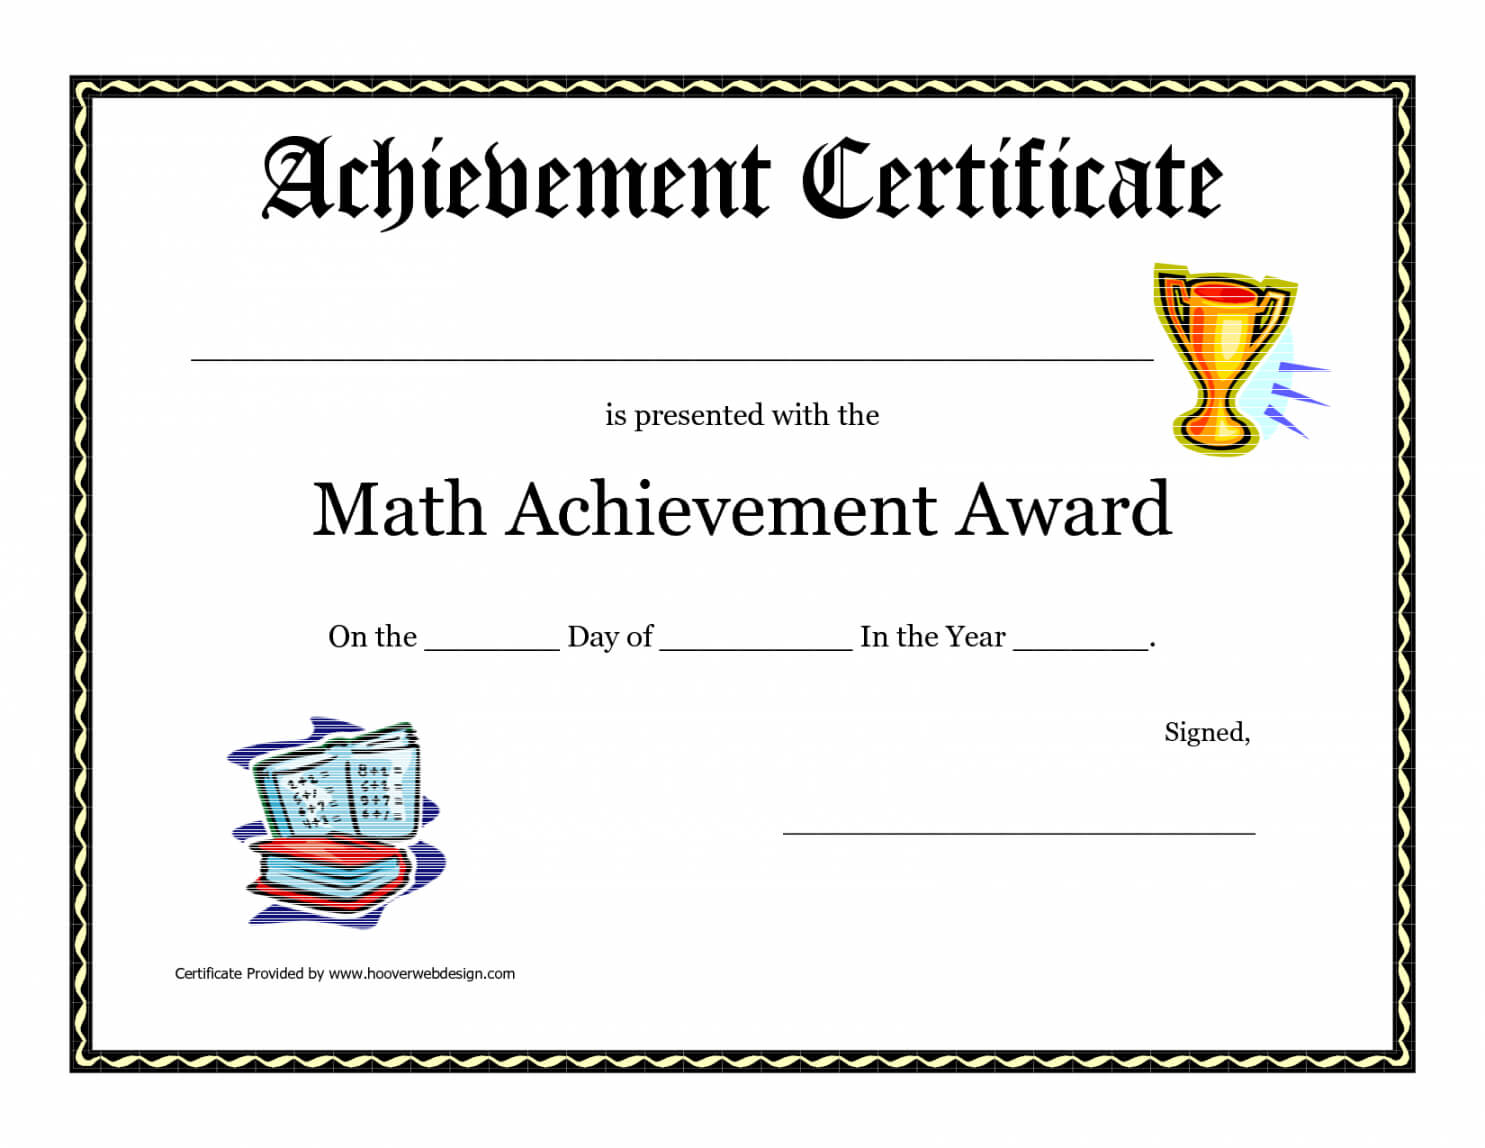 Math Achievement Award Printable Certificate Pdf Math For Academic Award Certificate Template